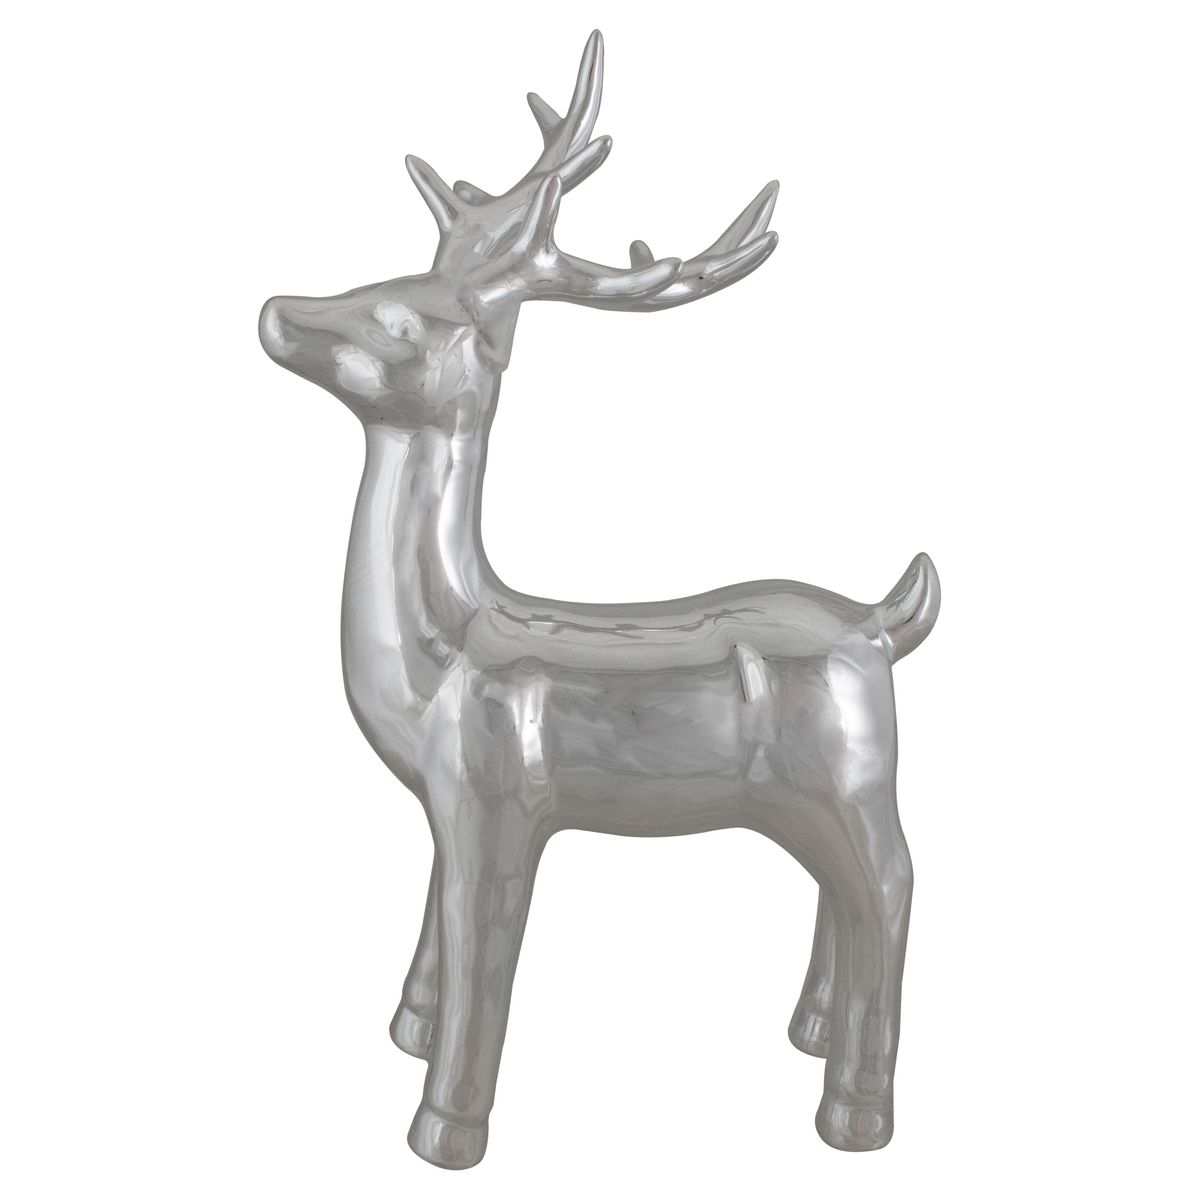 [RDY] [送料無料] 14インチ メタリックシルバー スタンディングトナカイ クリスマステーブルトップ デコール [楽天海外通販] | 14" Metallic Silver Standing Reindeer Christmas Tabletop Decor